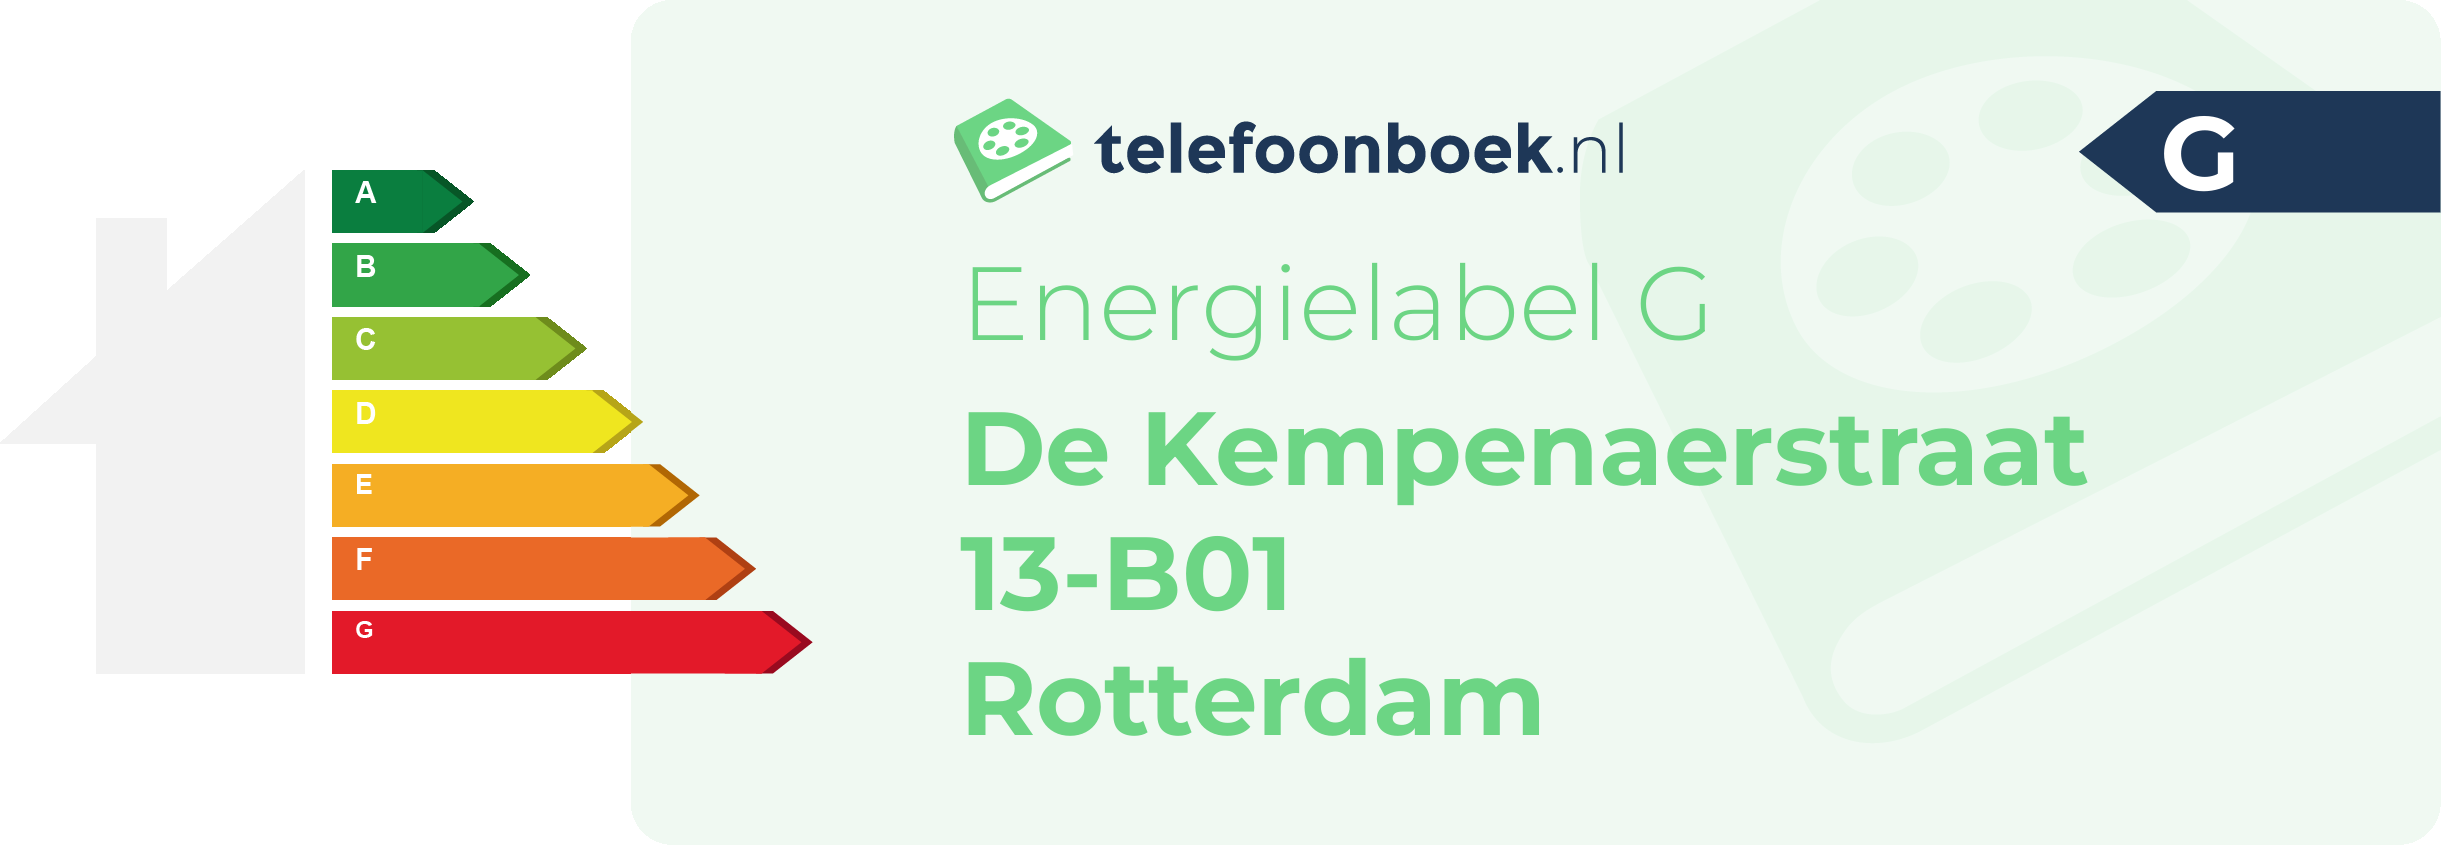 Energielabel De Kempenaerstraat 13-B01 Rotterdam